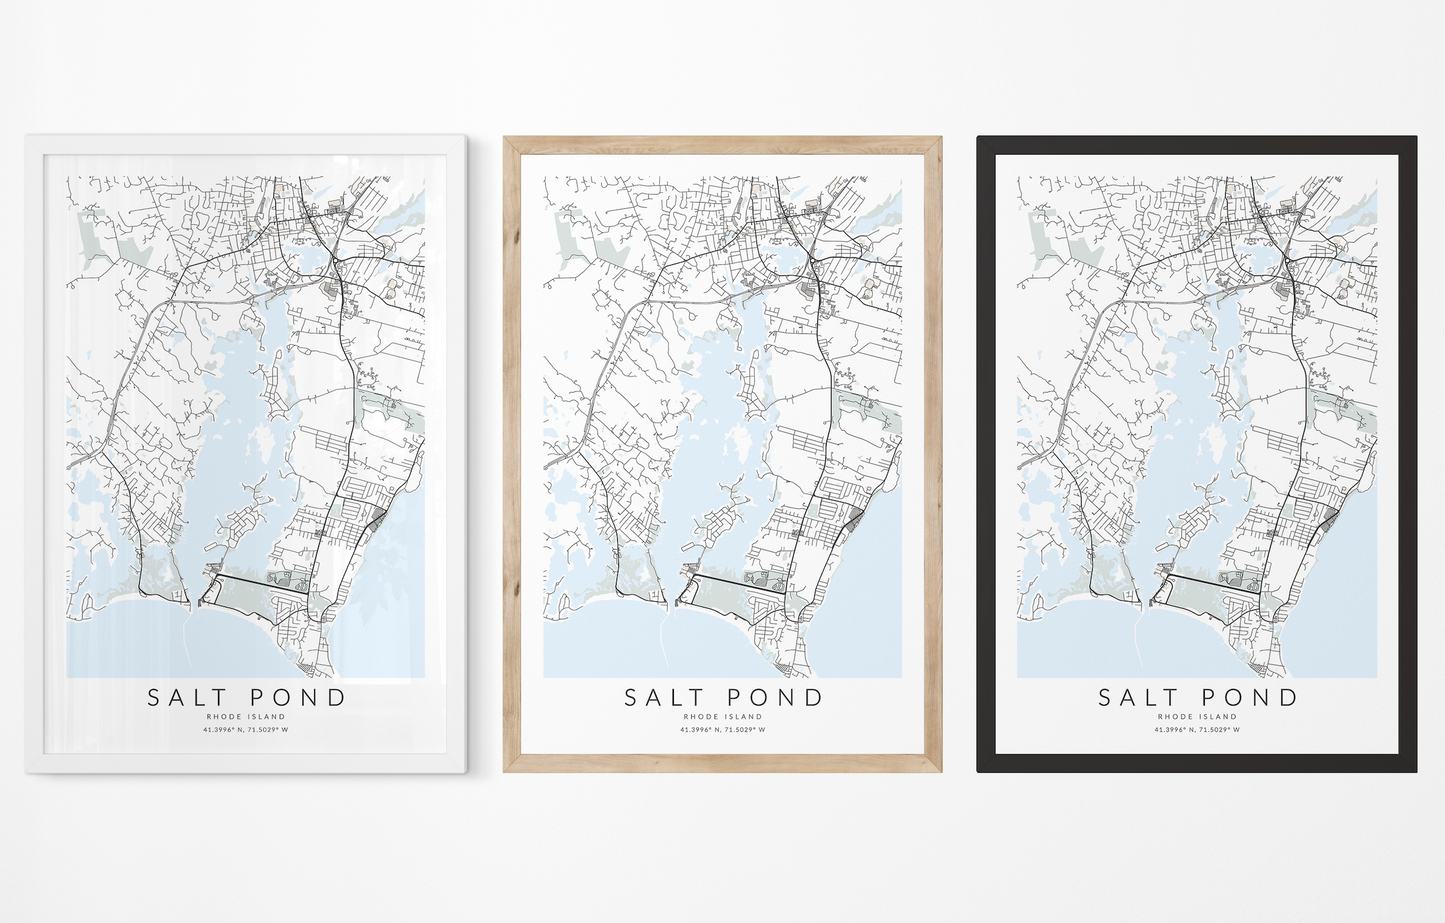 Salt Pond Map Print